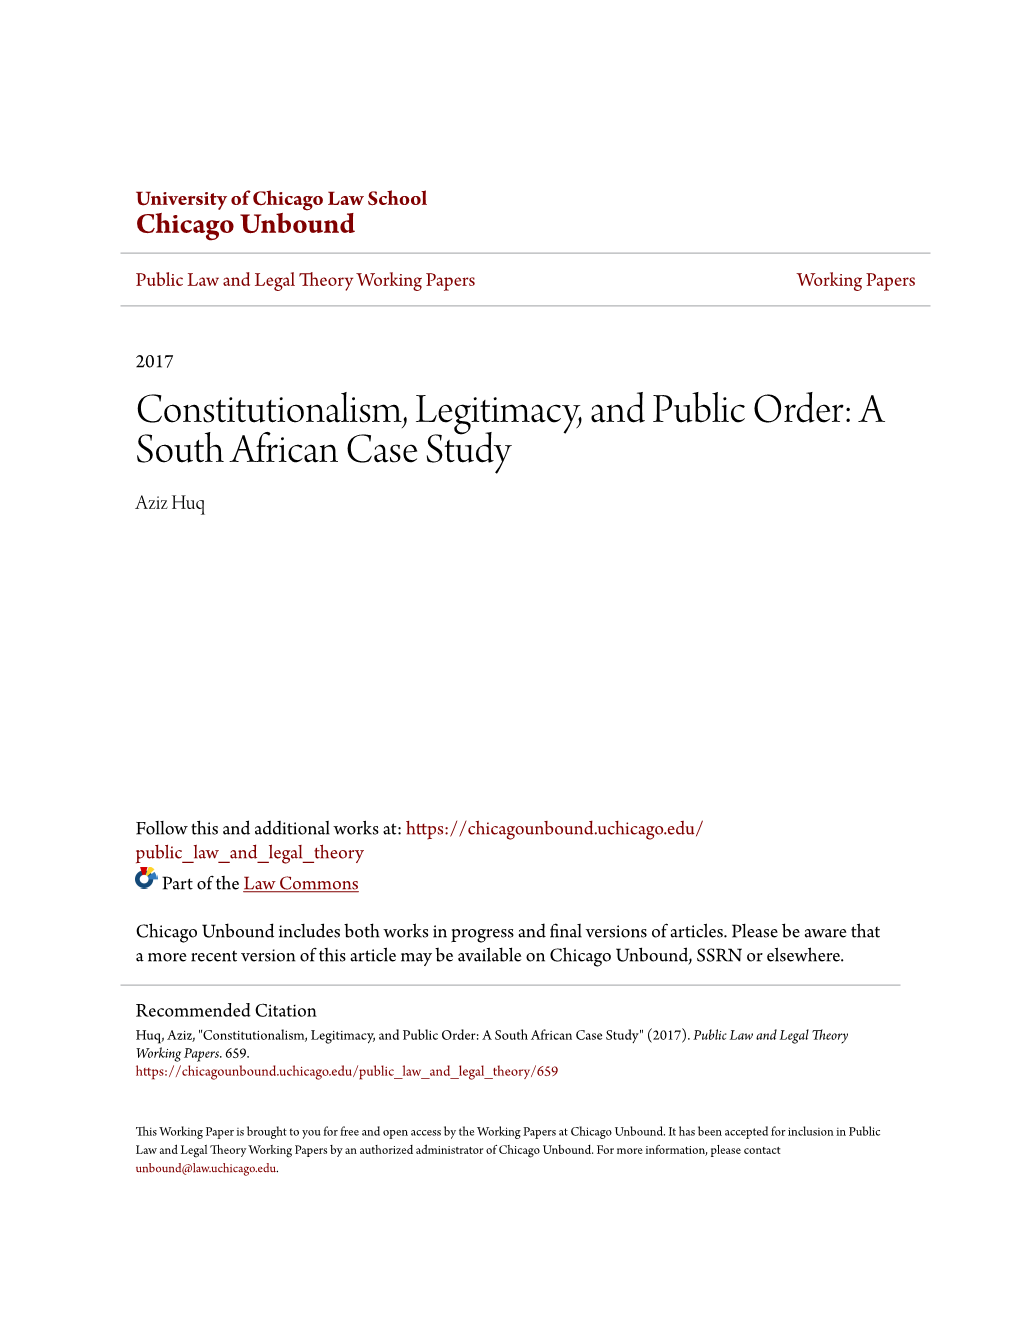 Constitutionalism, Legitimacy, and Public Order: a South African Case Study Aziz Huq